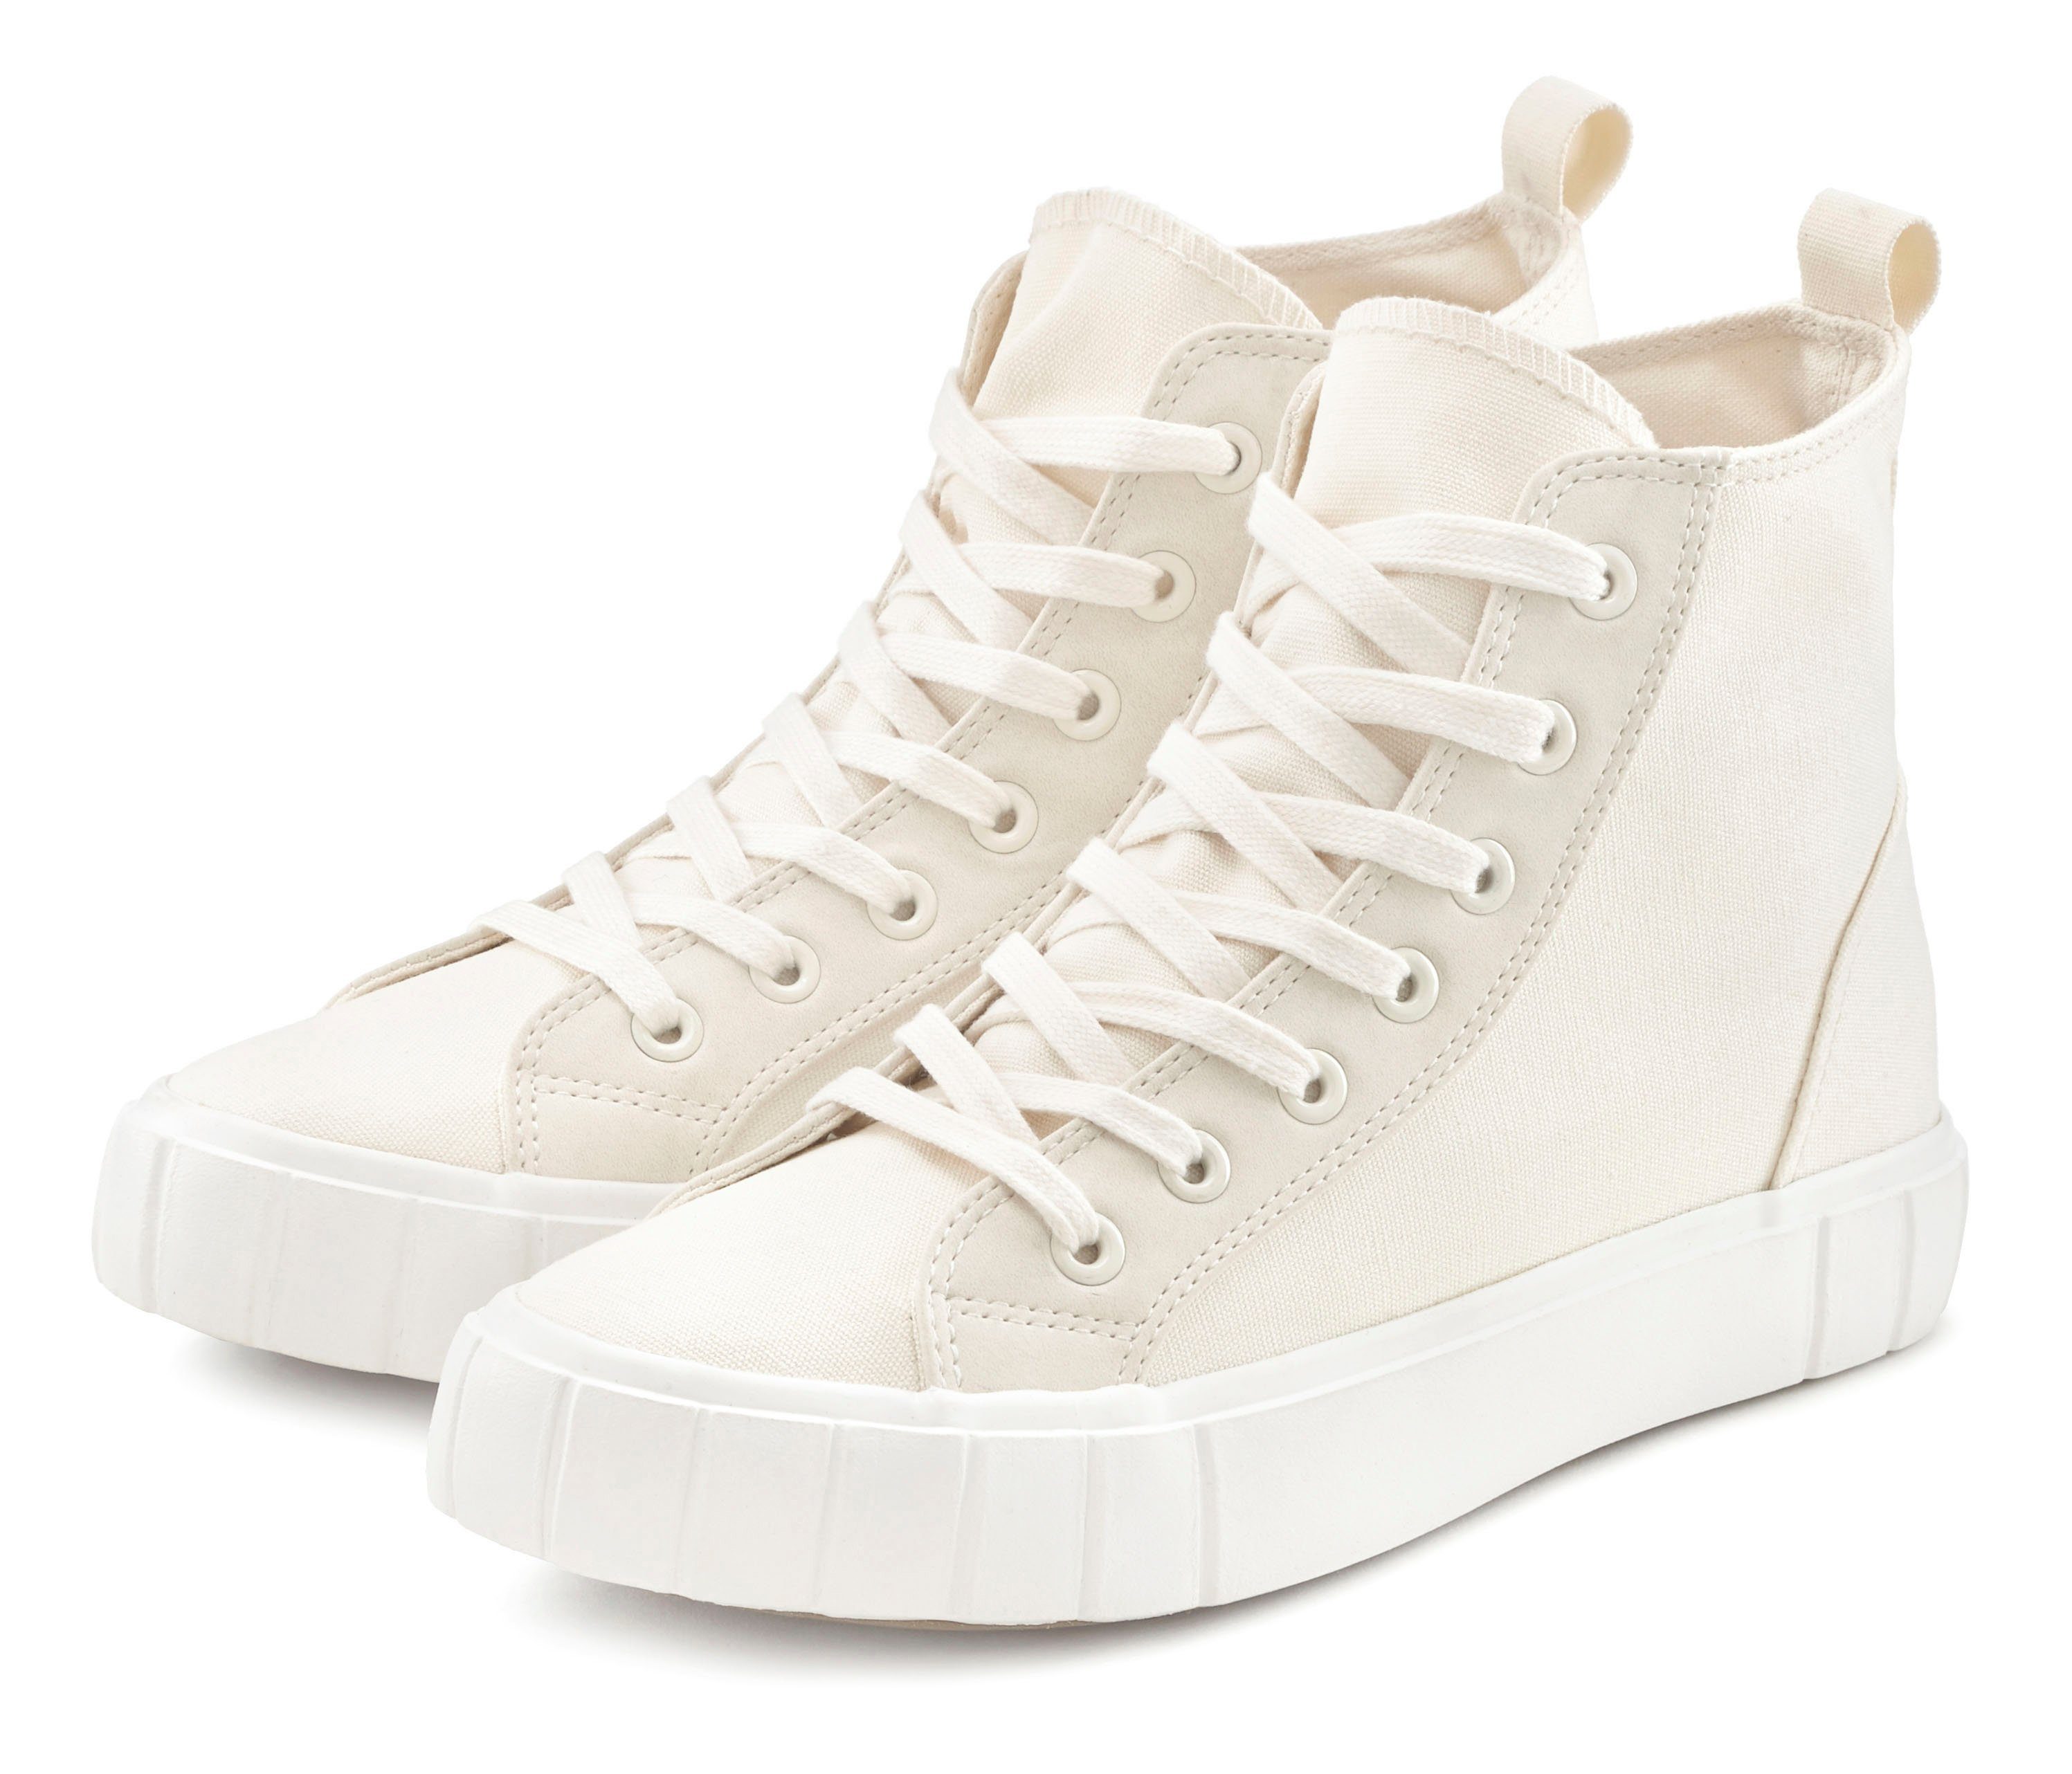 Schuhe Sneaker Elbsand Sneaker High Top Boots aus modischem Canvas-Material mit kleiner Plateausohle vegan